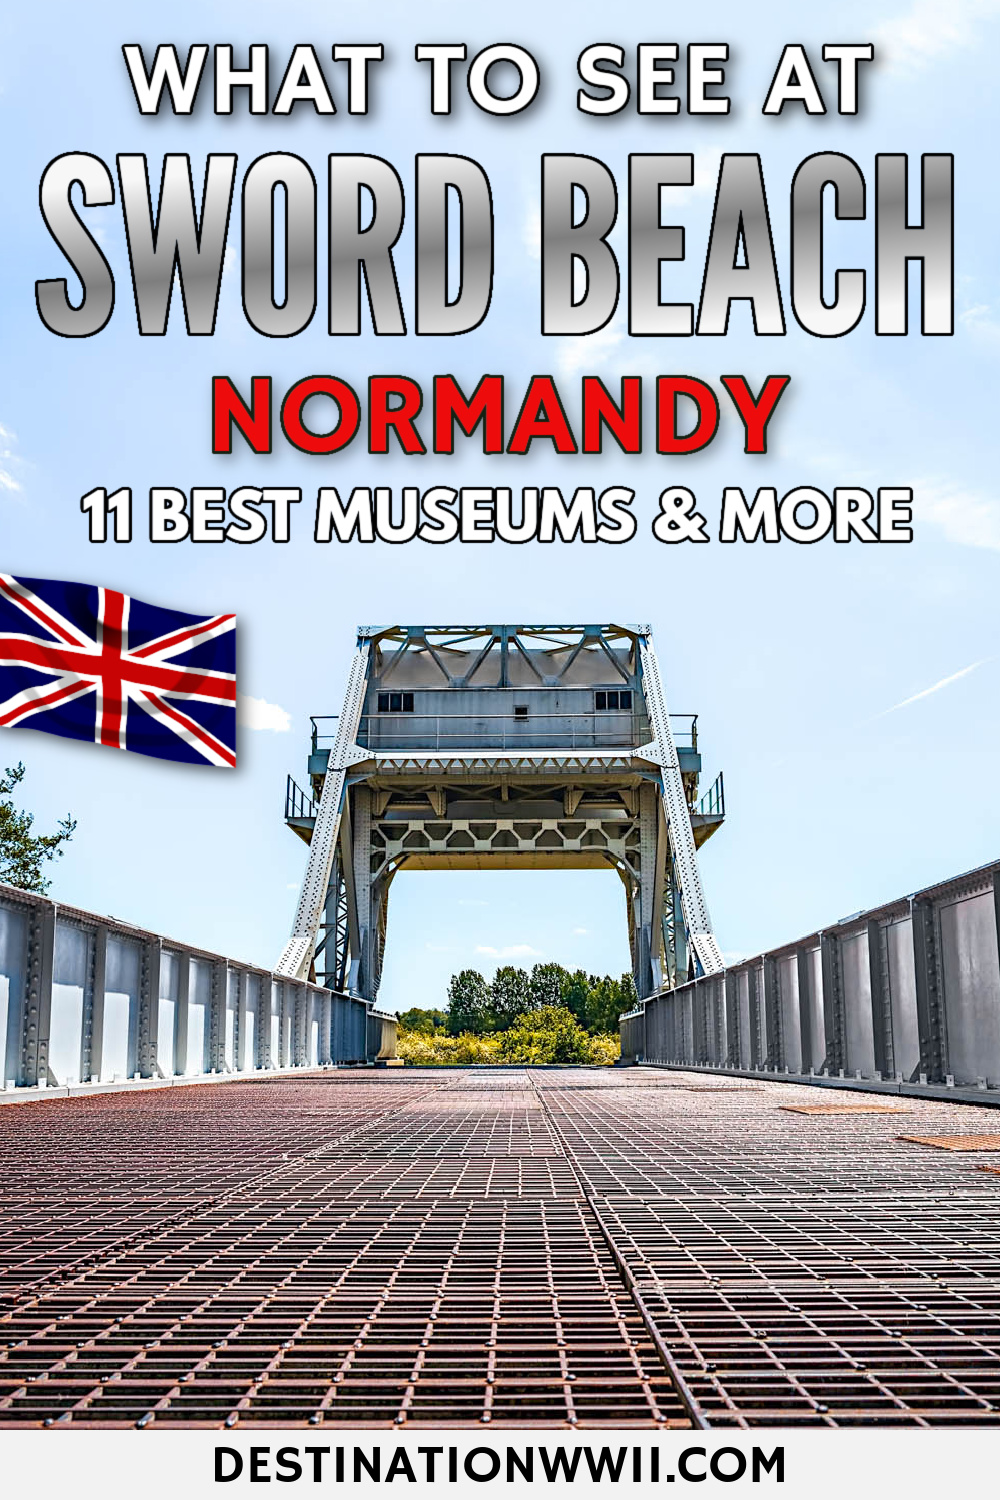 What to see at Sword Beach Normandy, France | Pegasus Bridge Museum and memorial, Caen Museum, and more